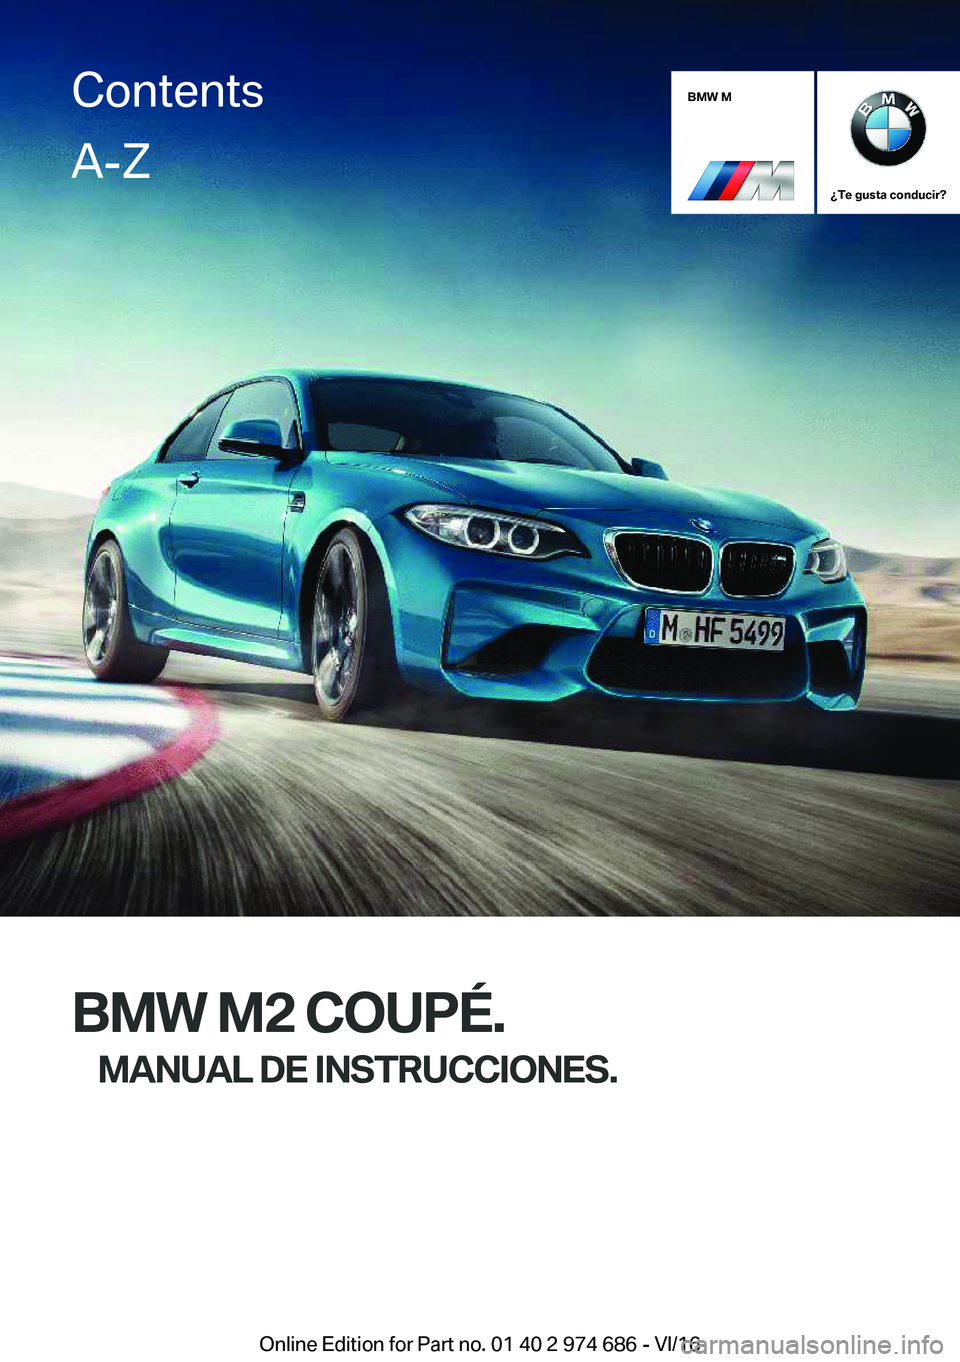 BMW M2 2017  Manuales de Empleo (in Spanish) �B�M�W��M
��T�e��g�u�s�t�a��c�o�n�d�u�c�i�r� 
�B�M�W��M�2��C�O�U�P�